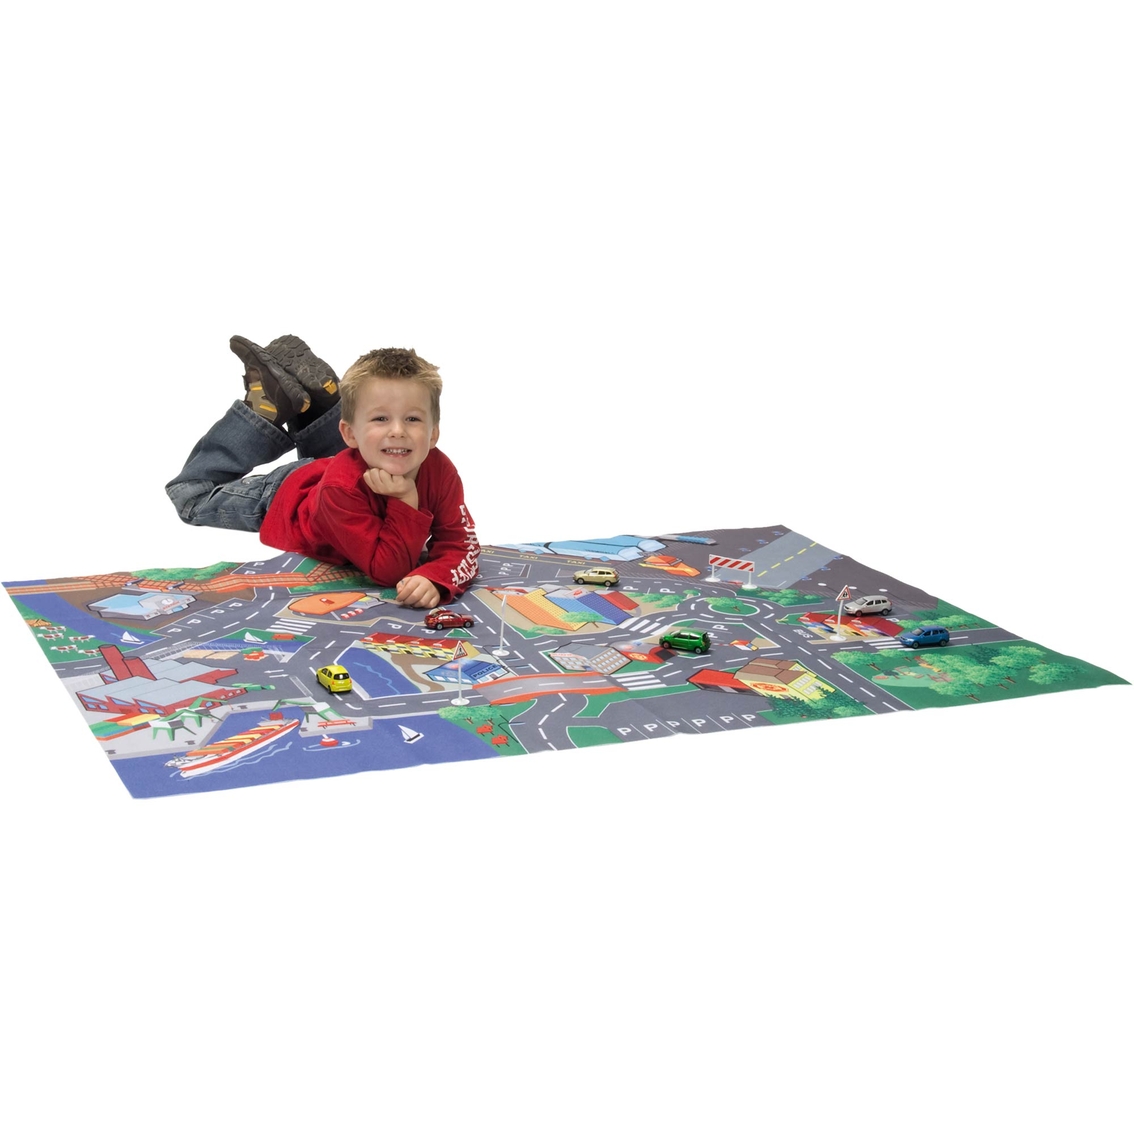 Dickie Toys Play Carpet Playmat Vehicle Playset - Image 3 of 3